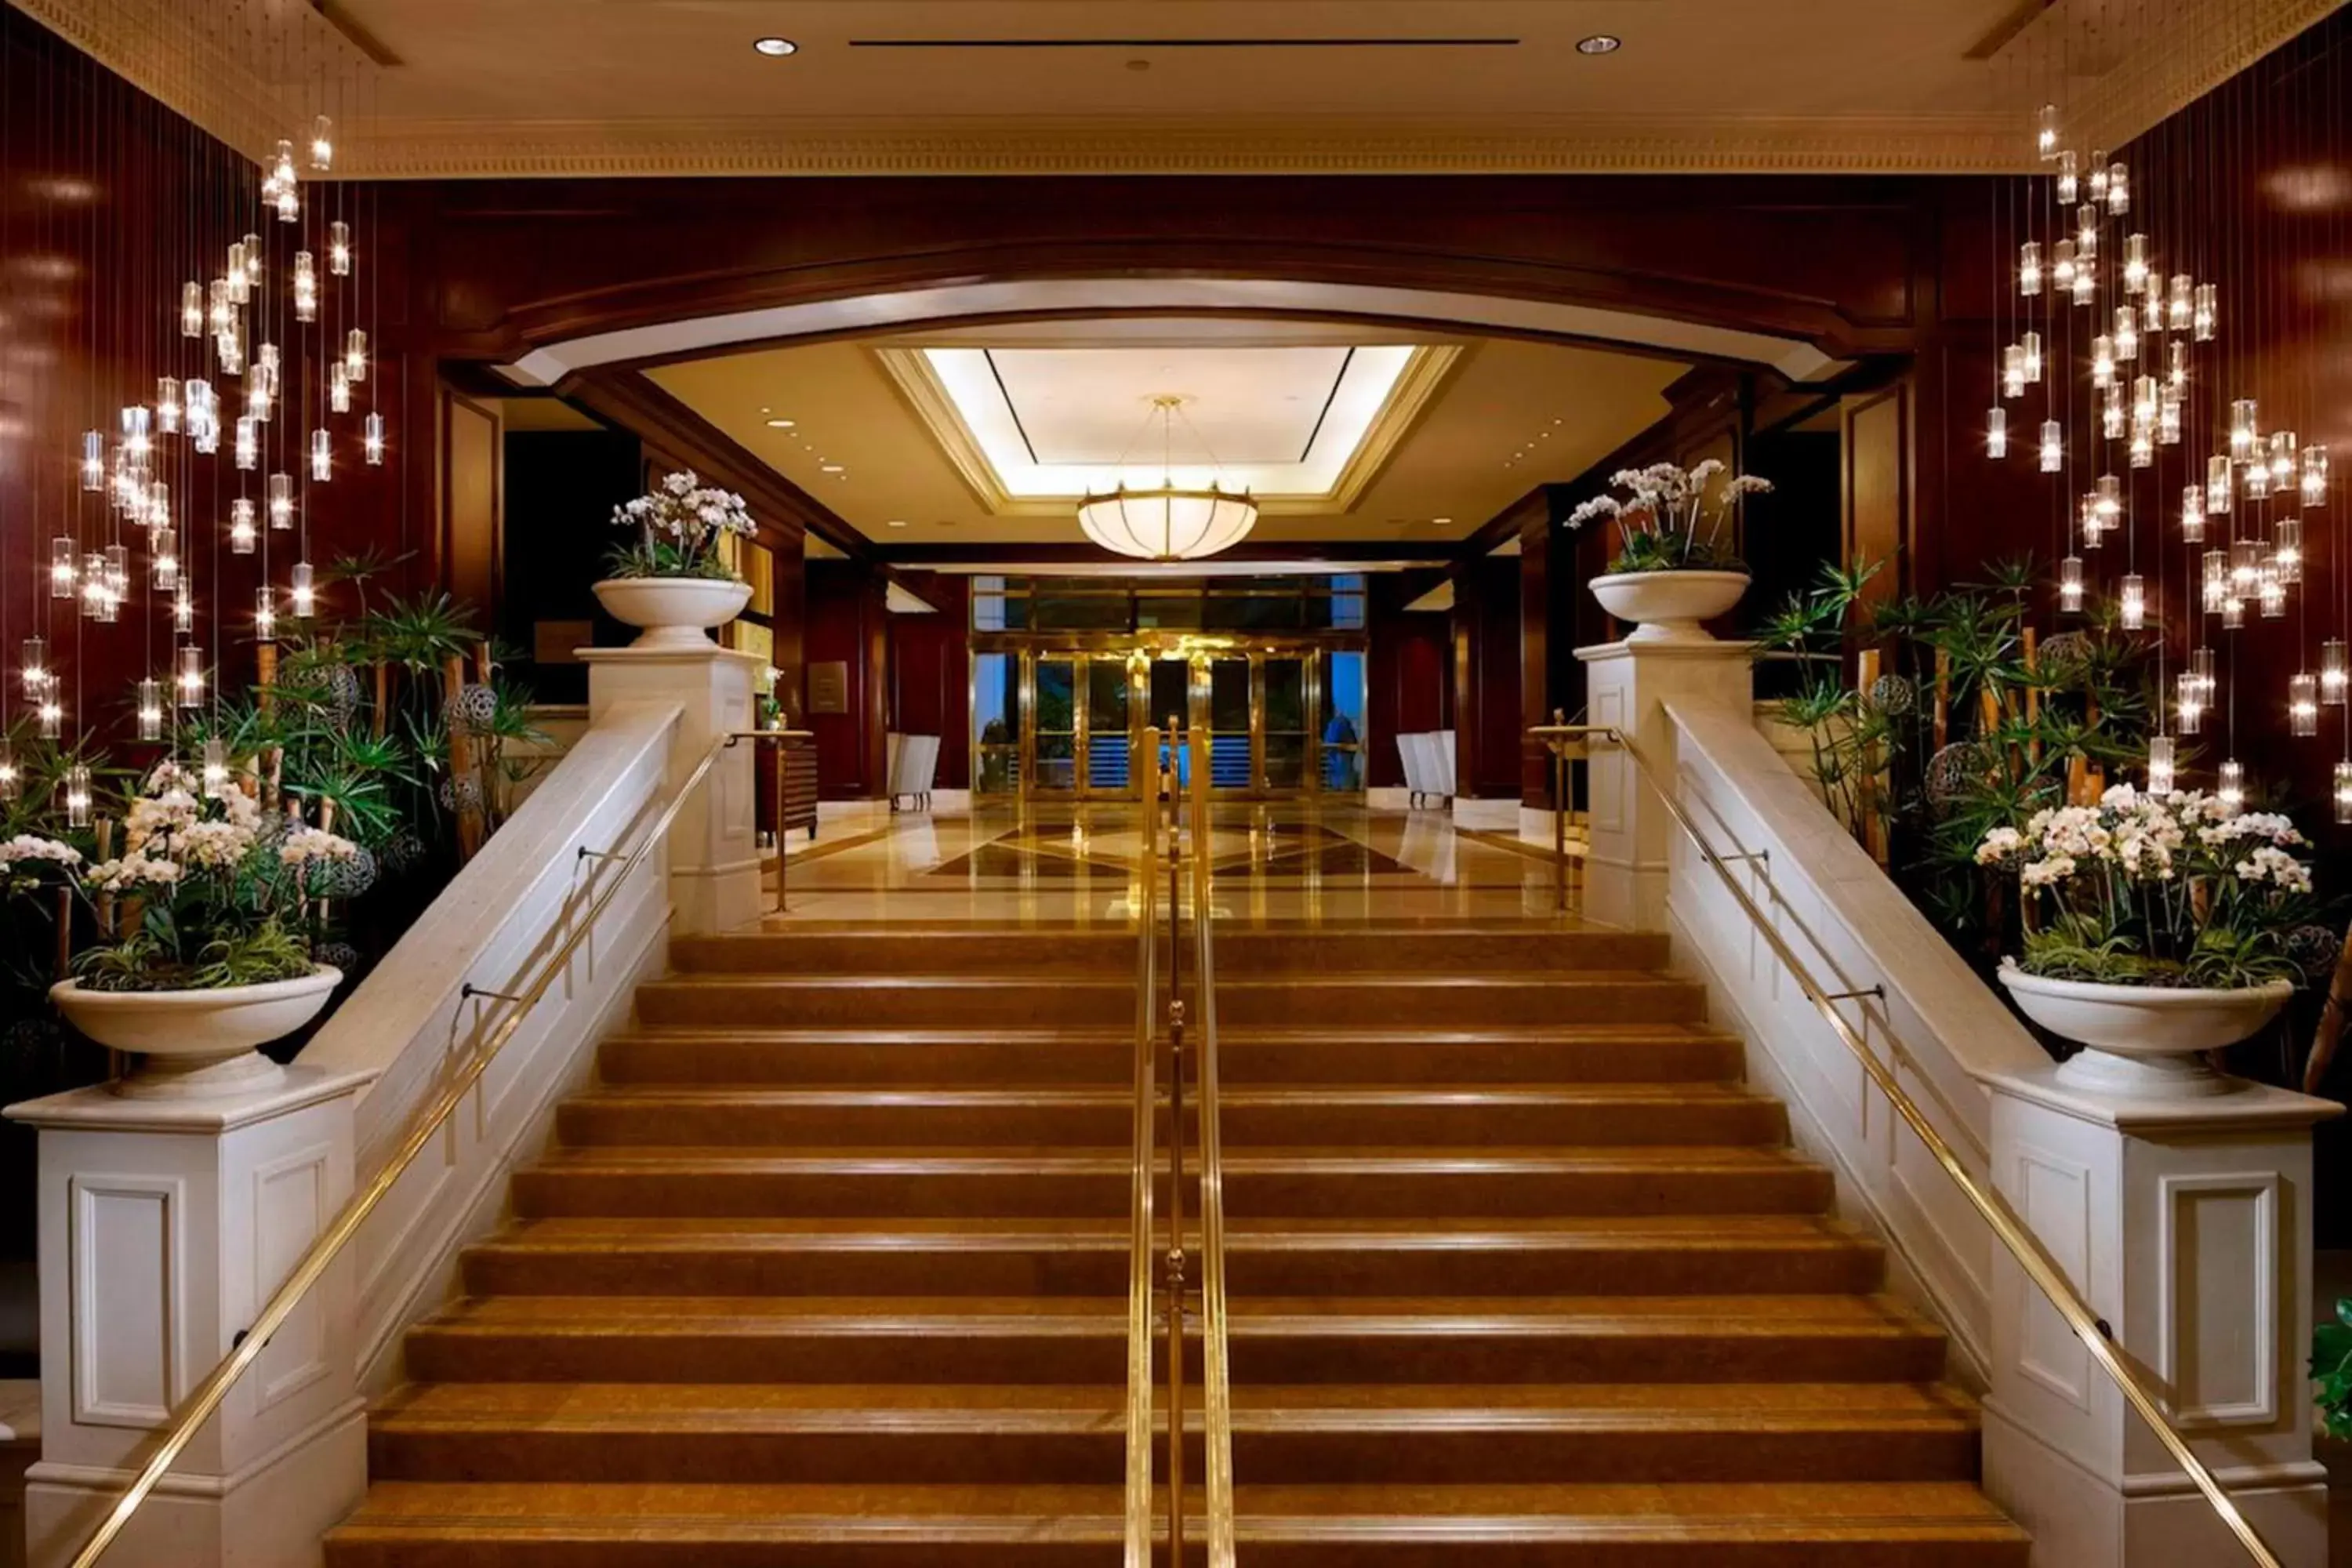 Lobby or reception in JW Marriott Miami